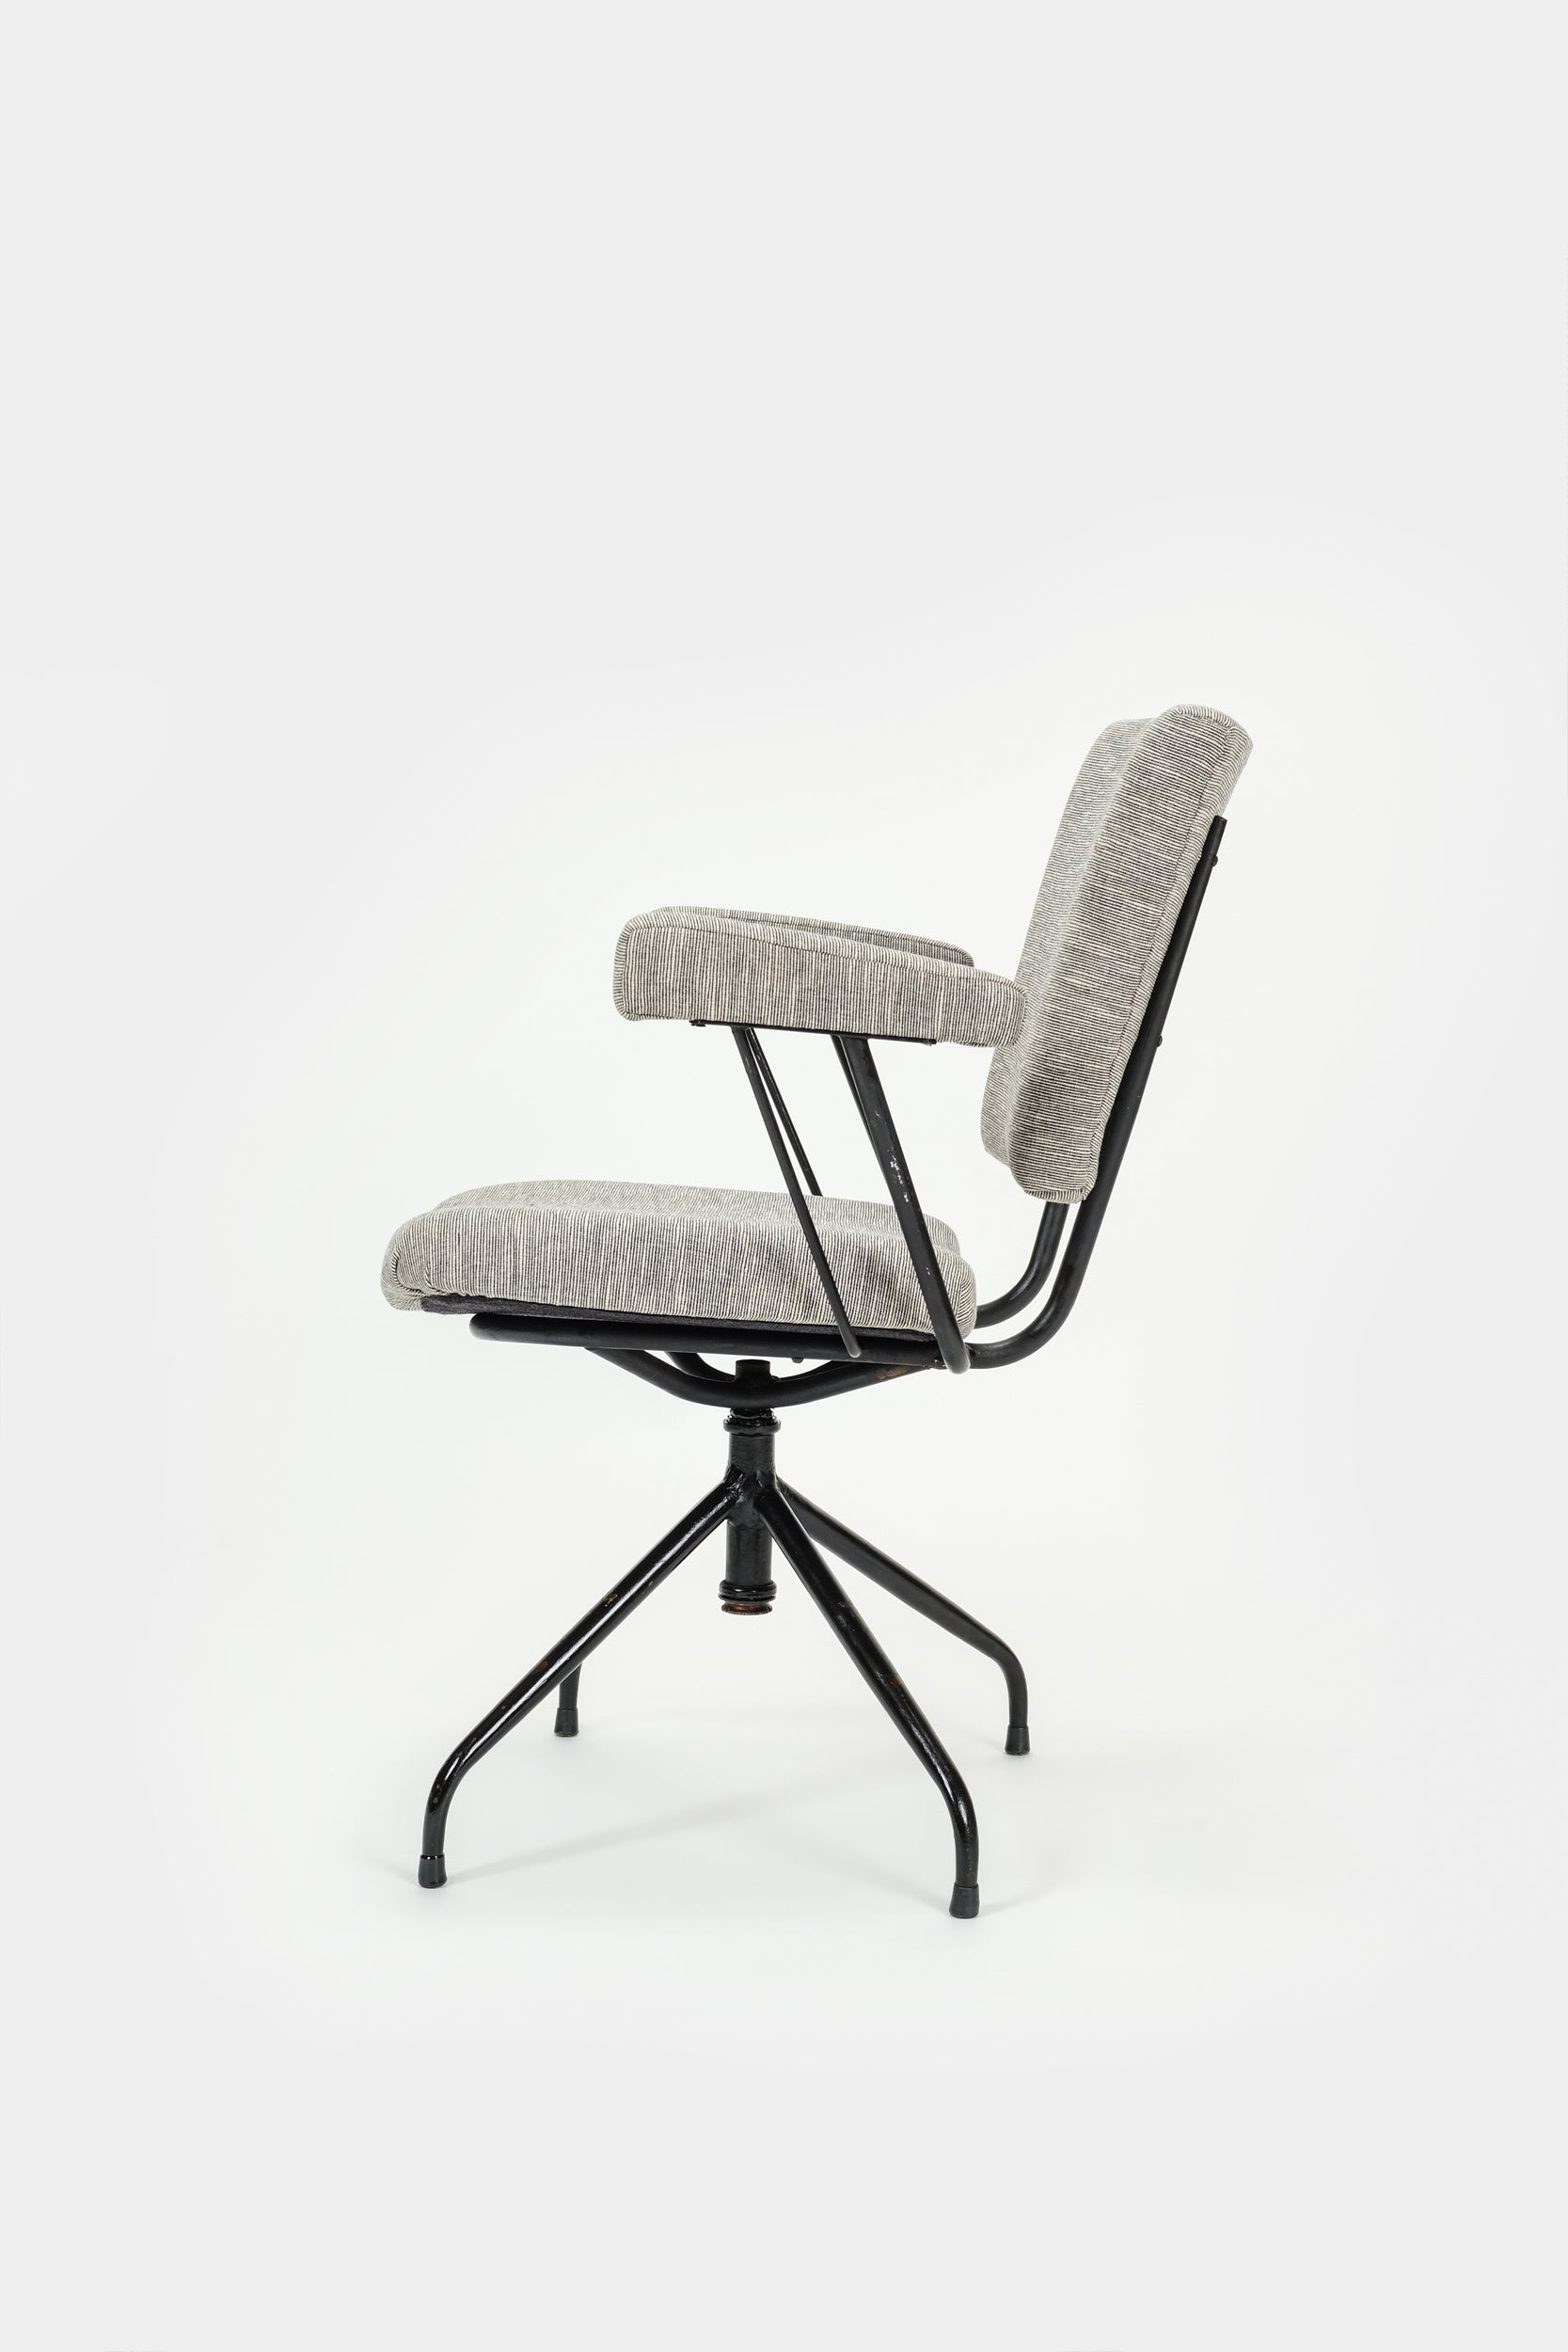 Italian office chair, 50s